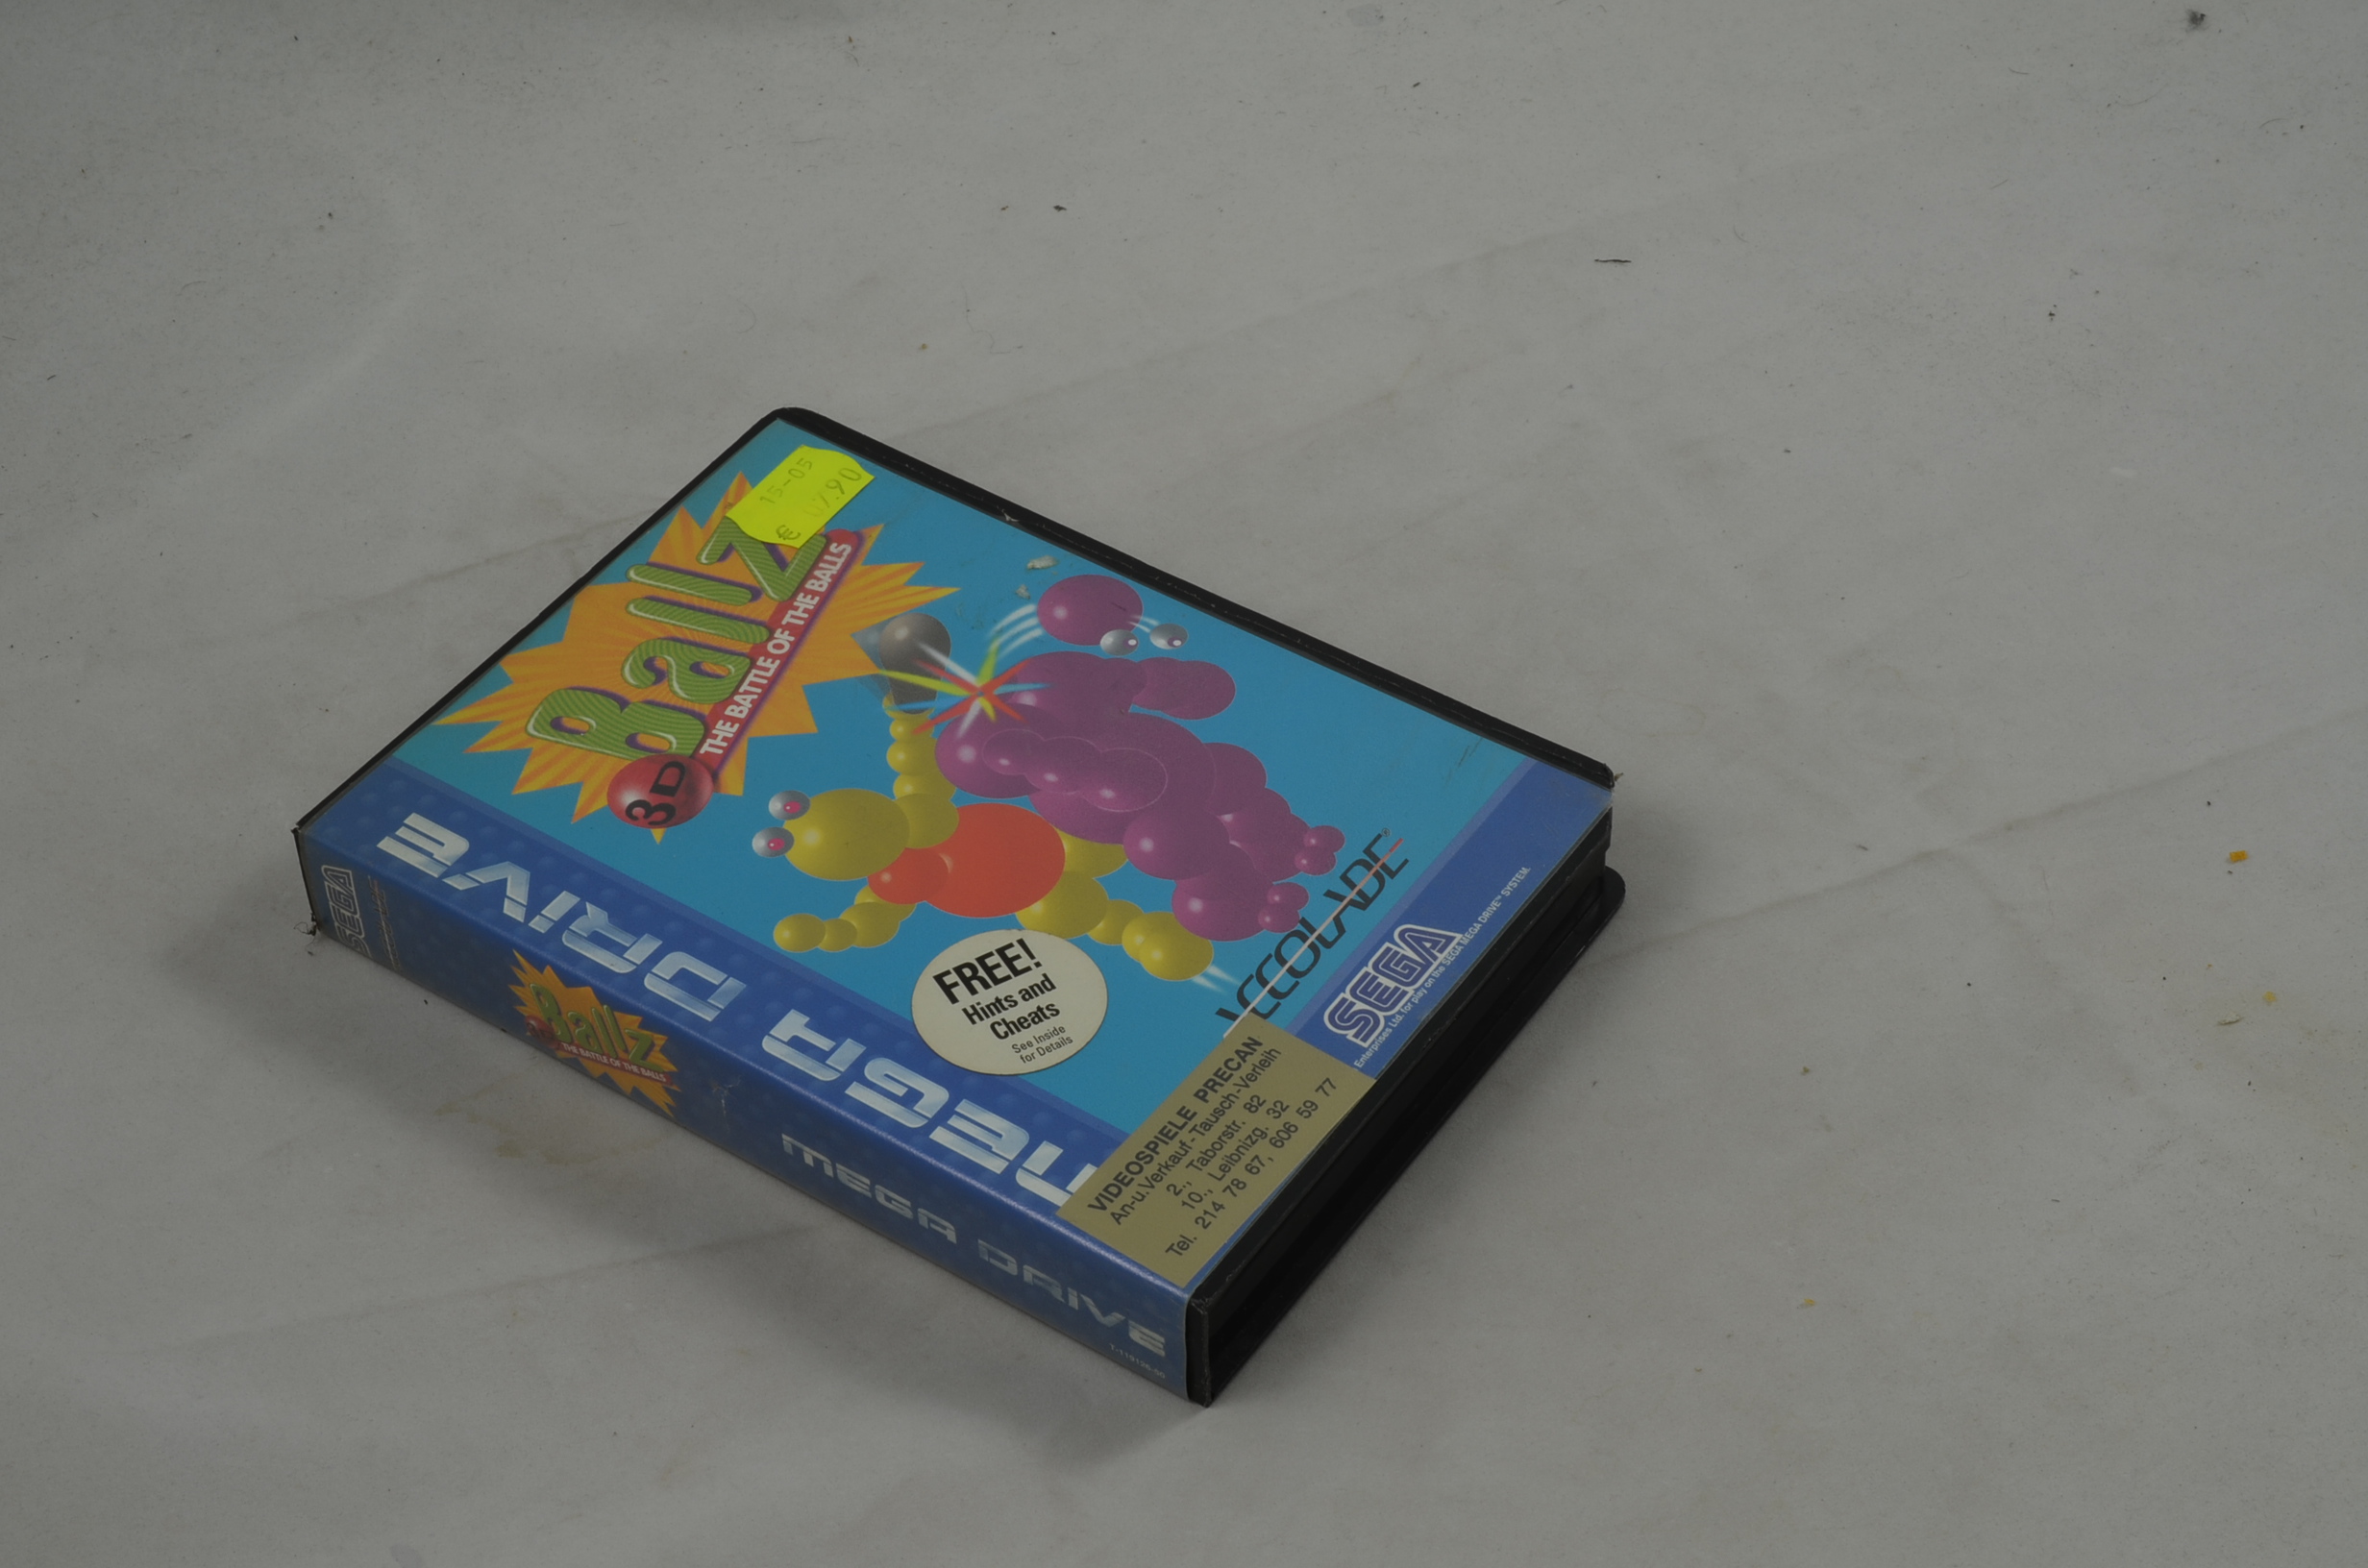 Produktbild von Ballz 3D Sega Mega Drive Spiel CIB (gut)